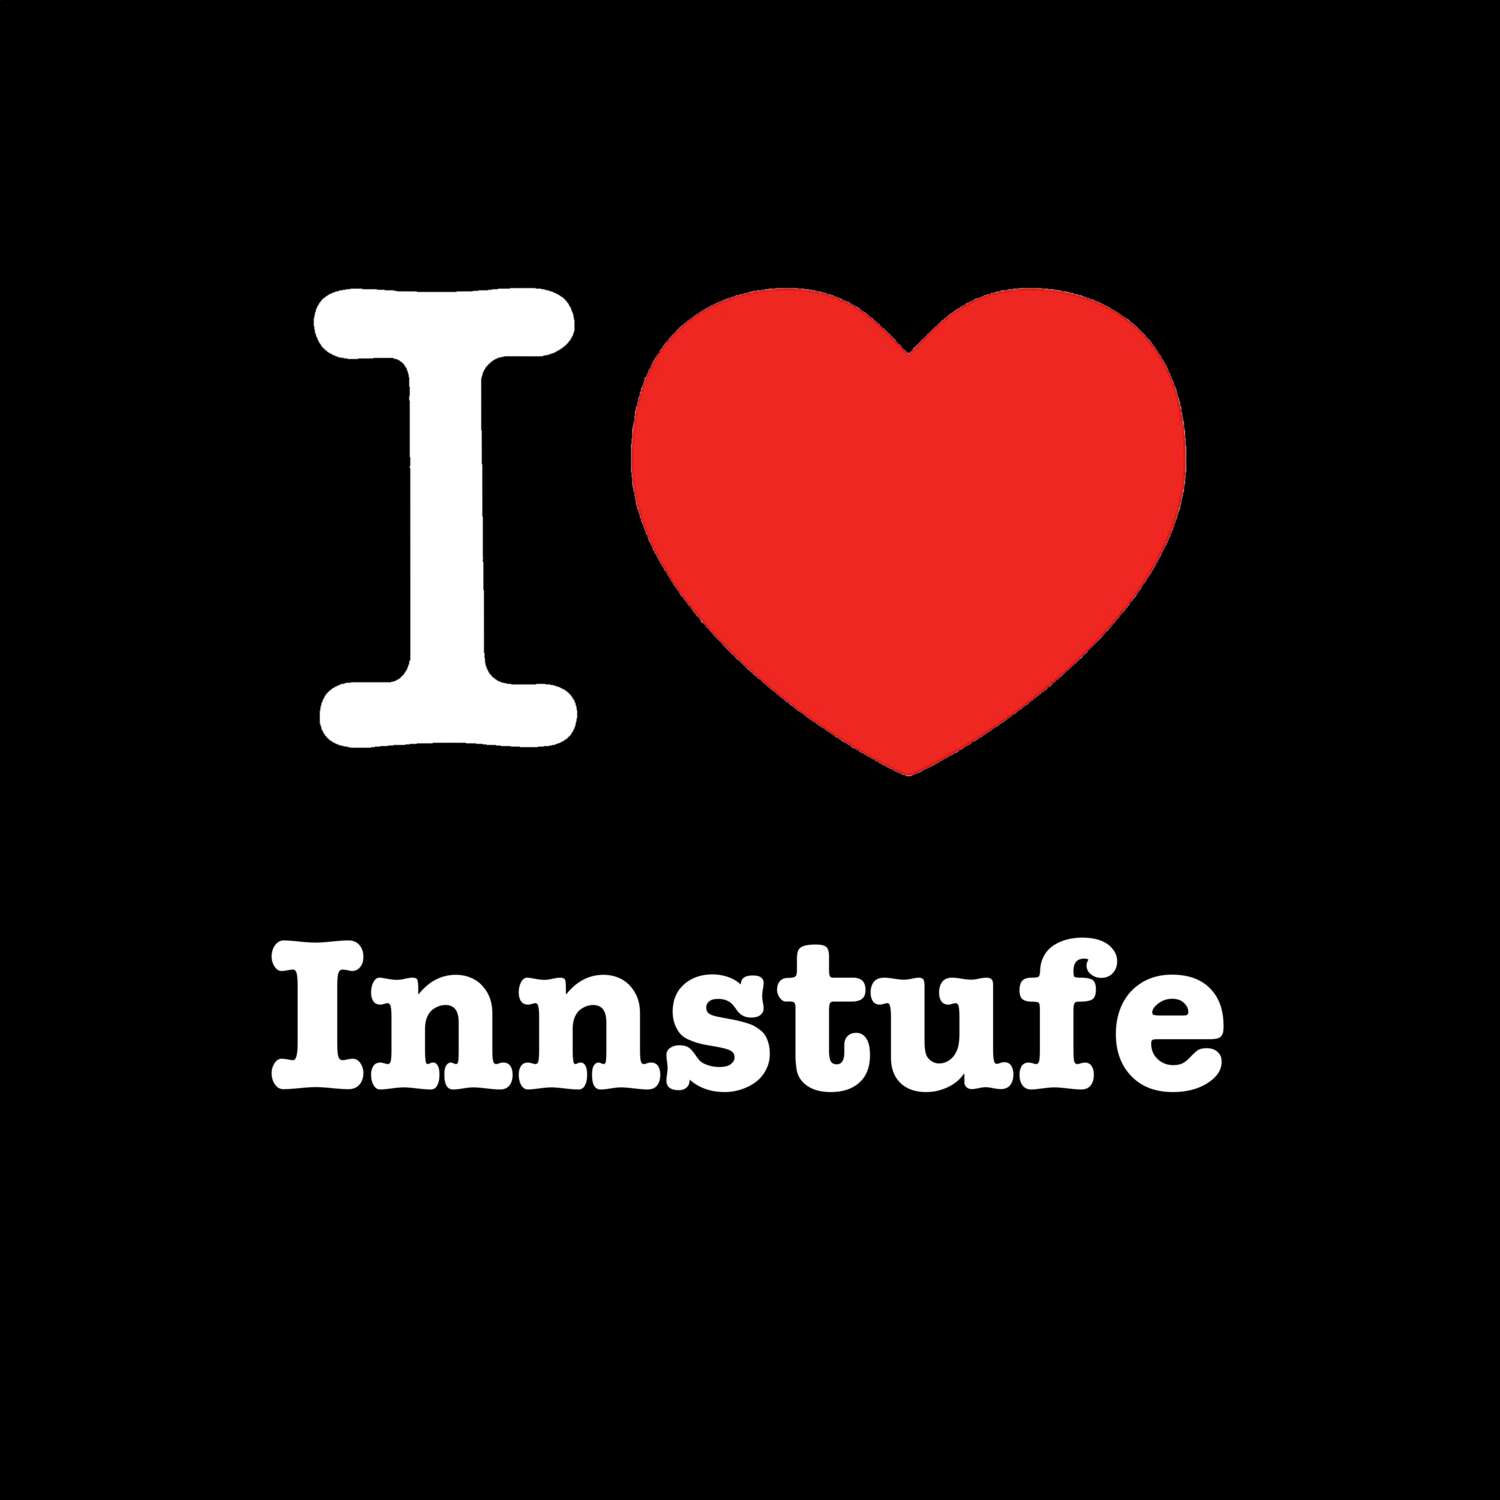 Innstufe T-Shirt »I love«